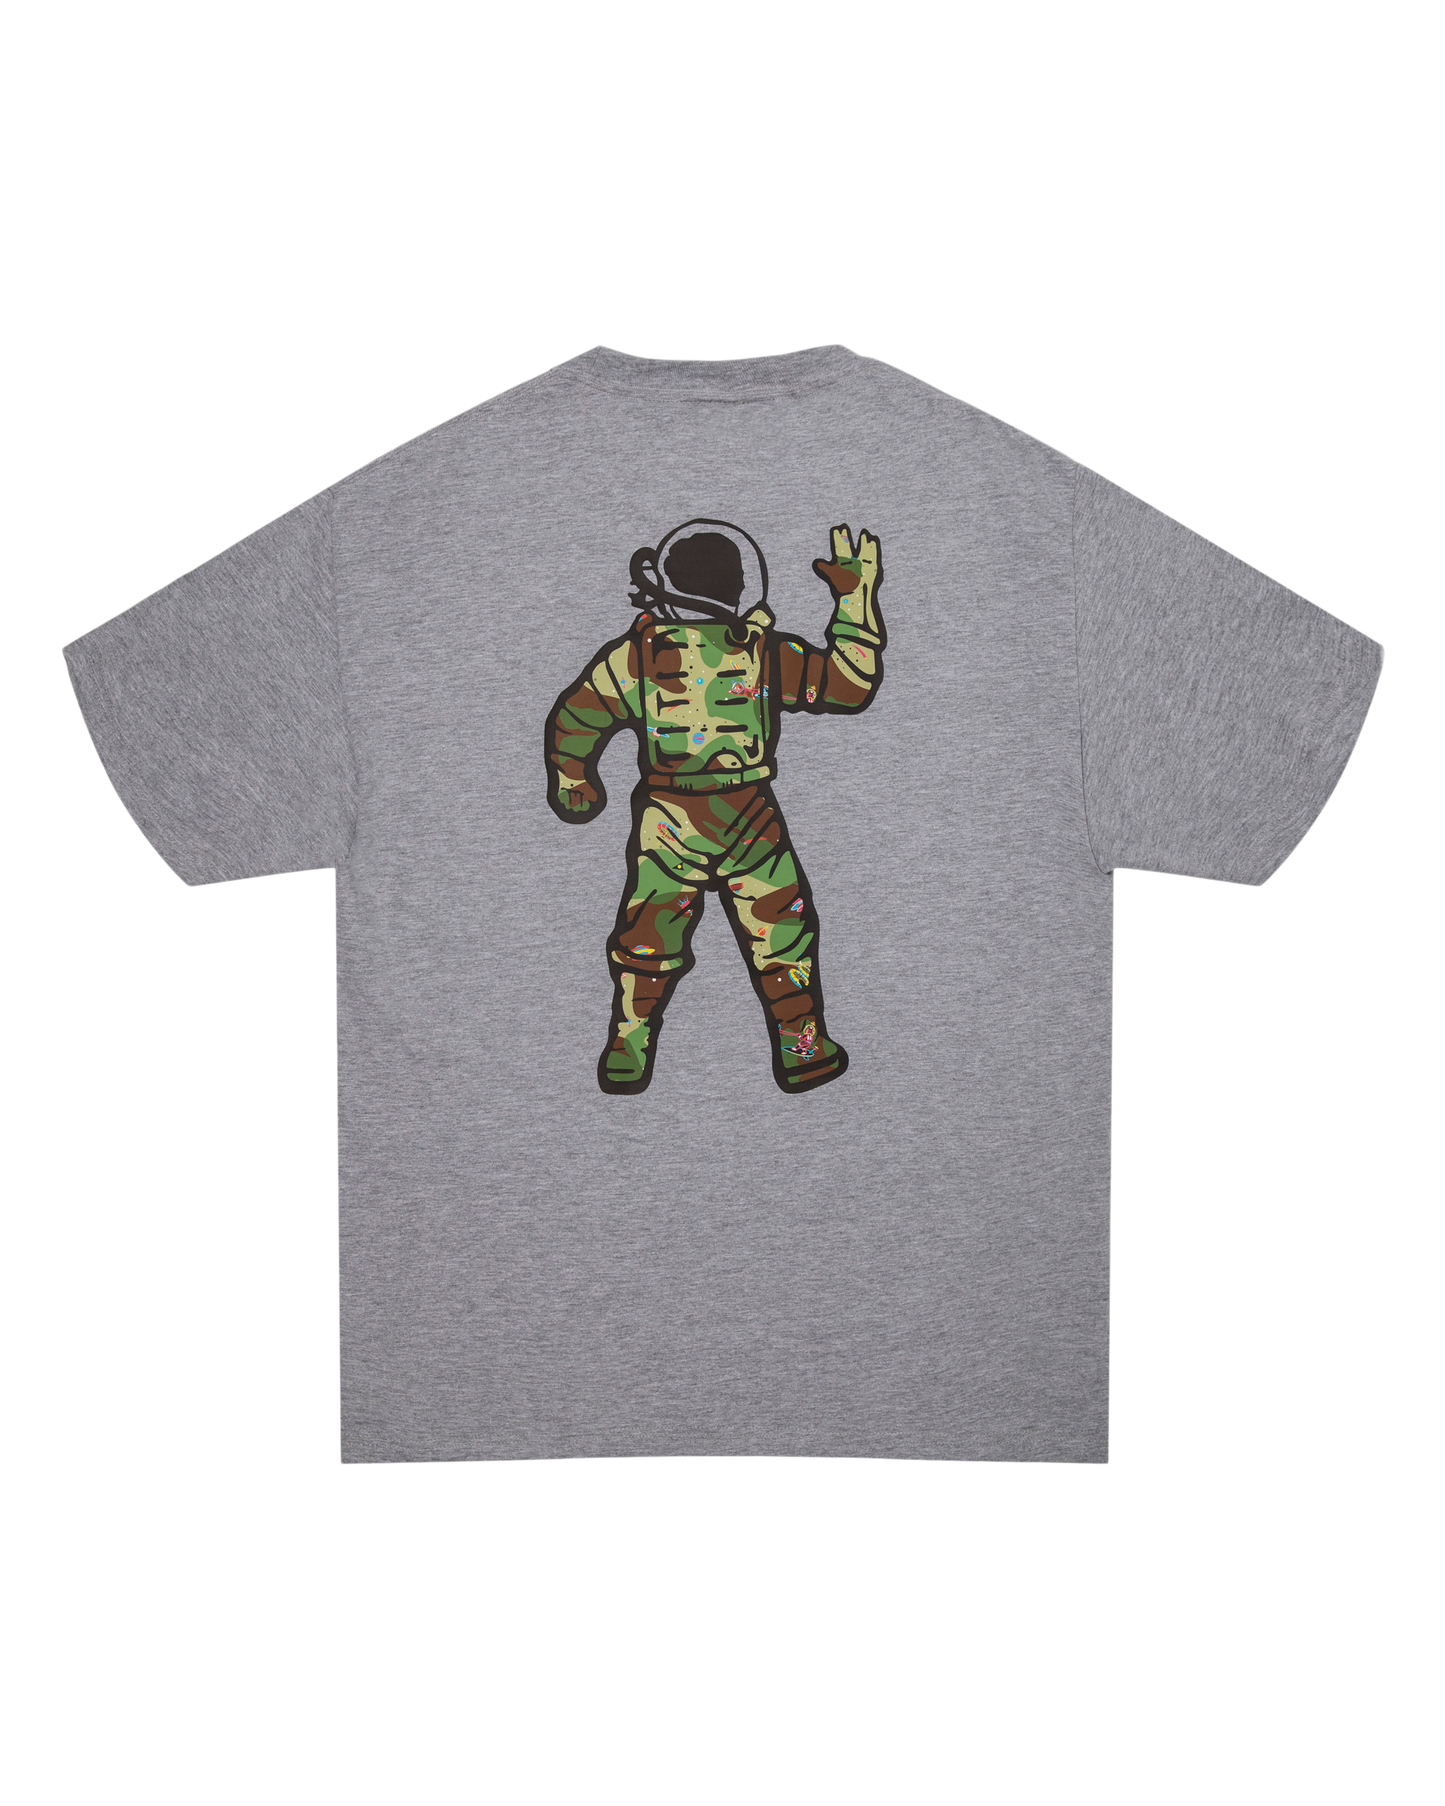 Camiseta clásica de camuflaje espacial con astronauta